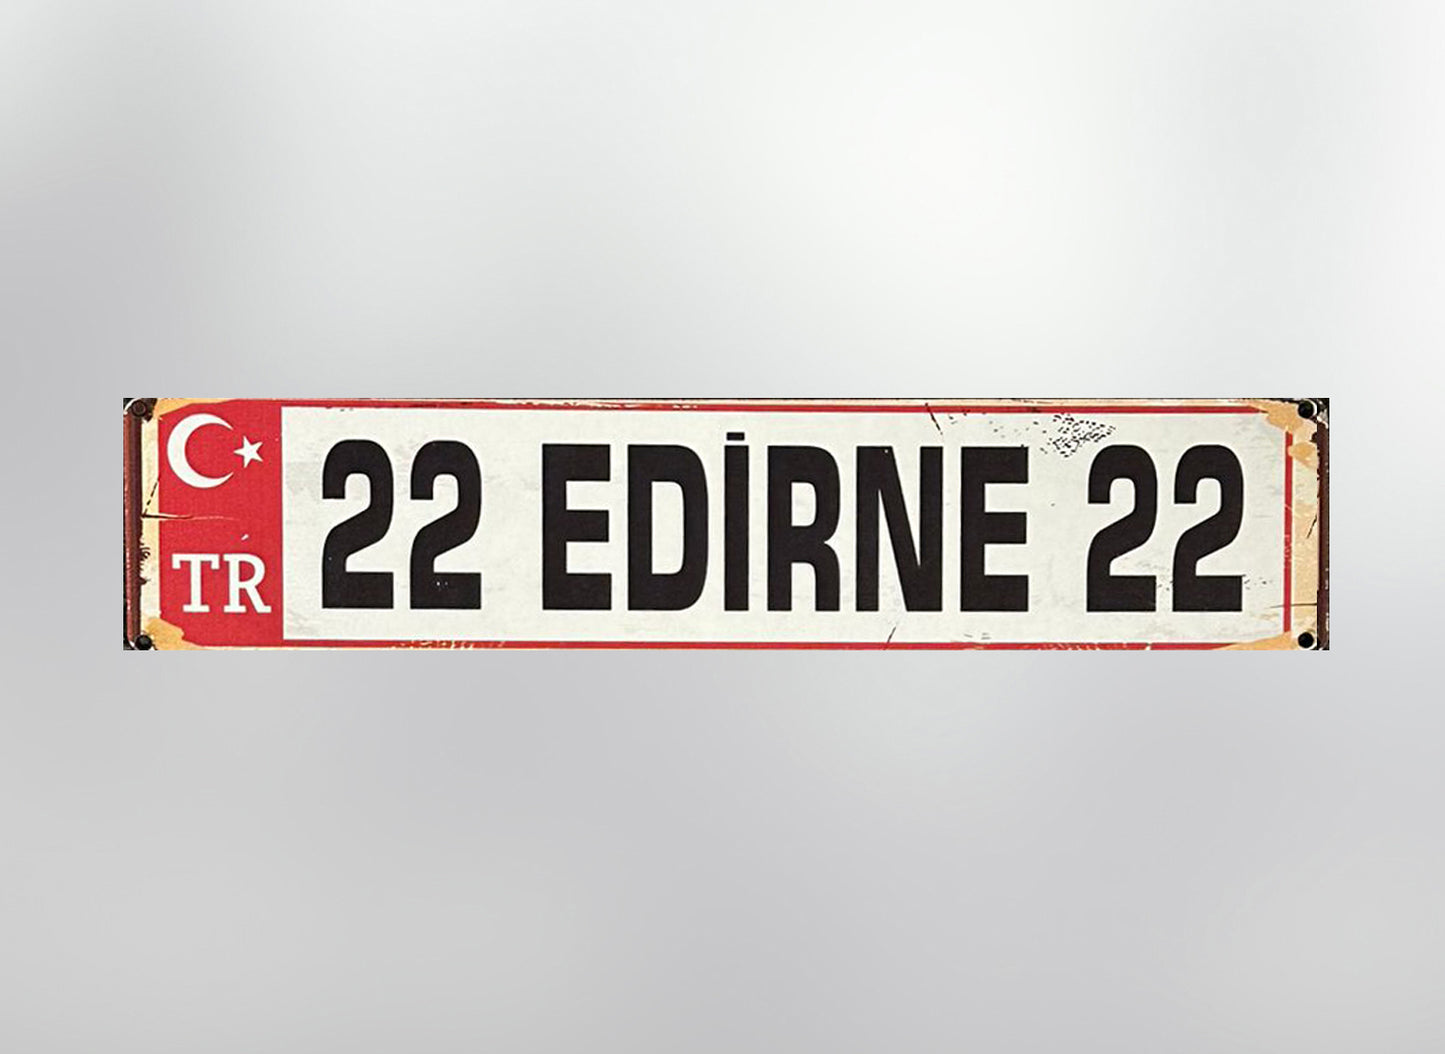 22 Edirne Plaka